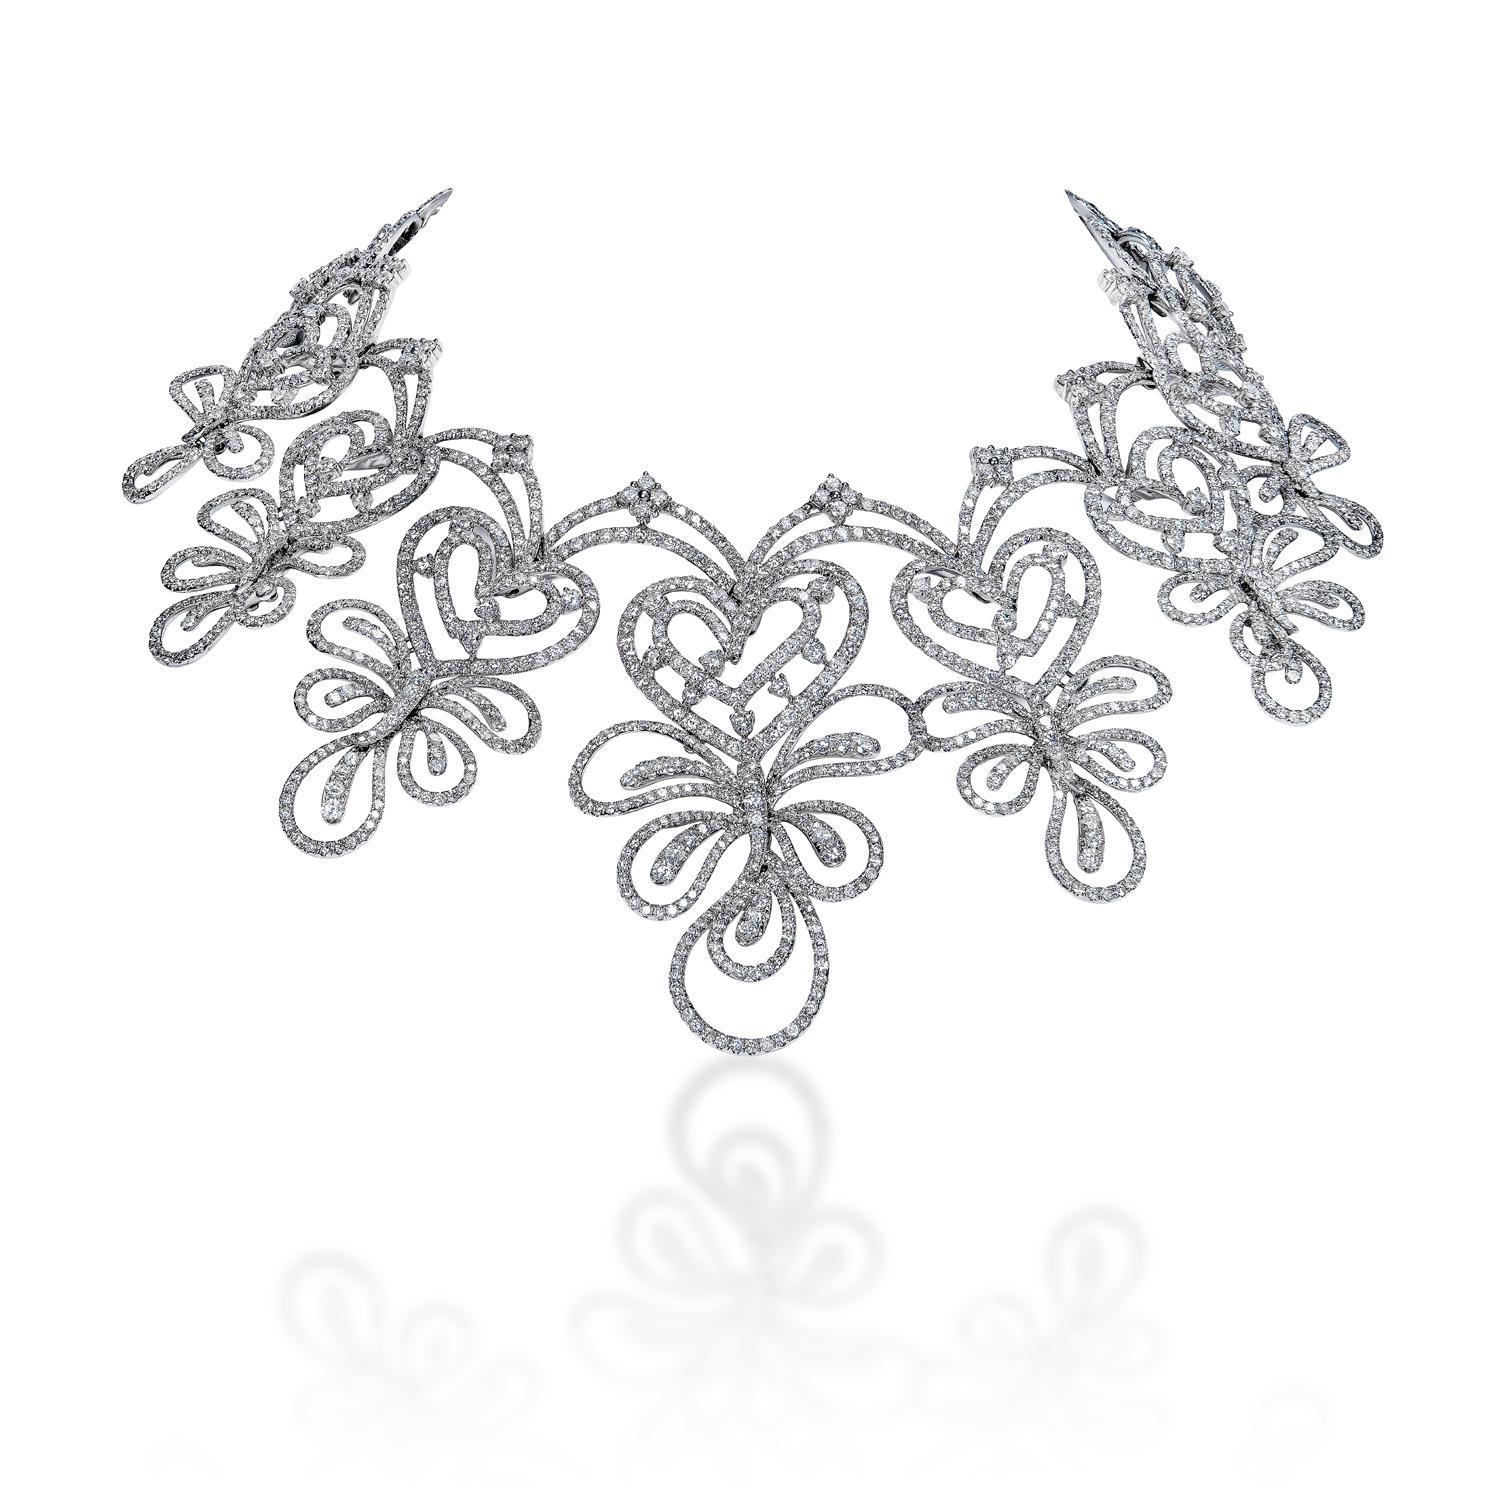 Diamond Necklace:

Carat Weight: 39.19 Carats
Shape: Round Brilliant Cut
Metal: 14 Karat White Gold
Style: Diamond Necklace